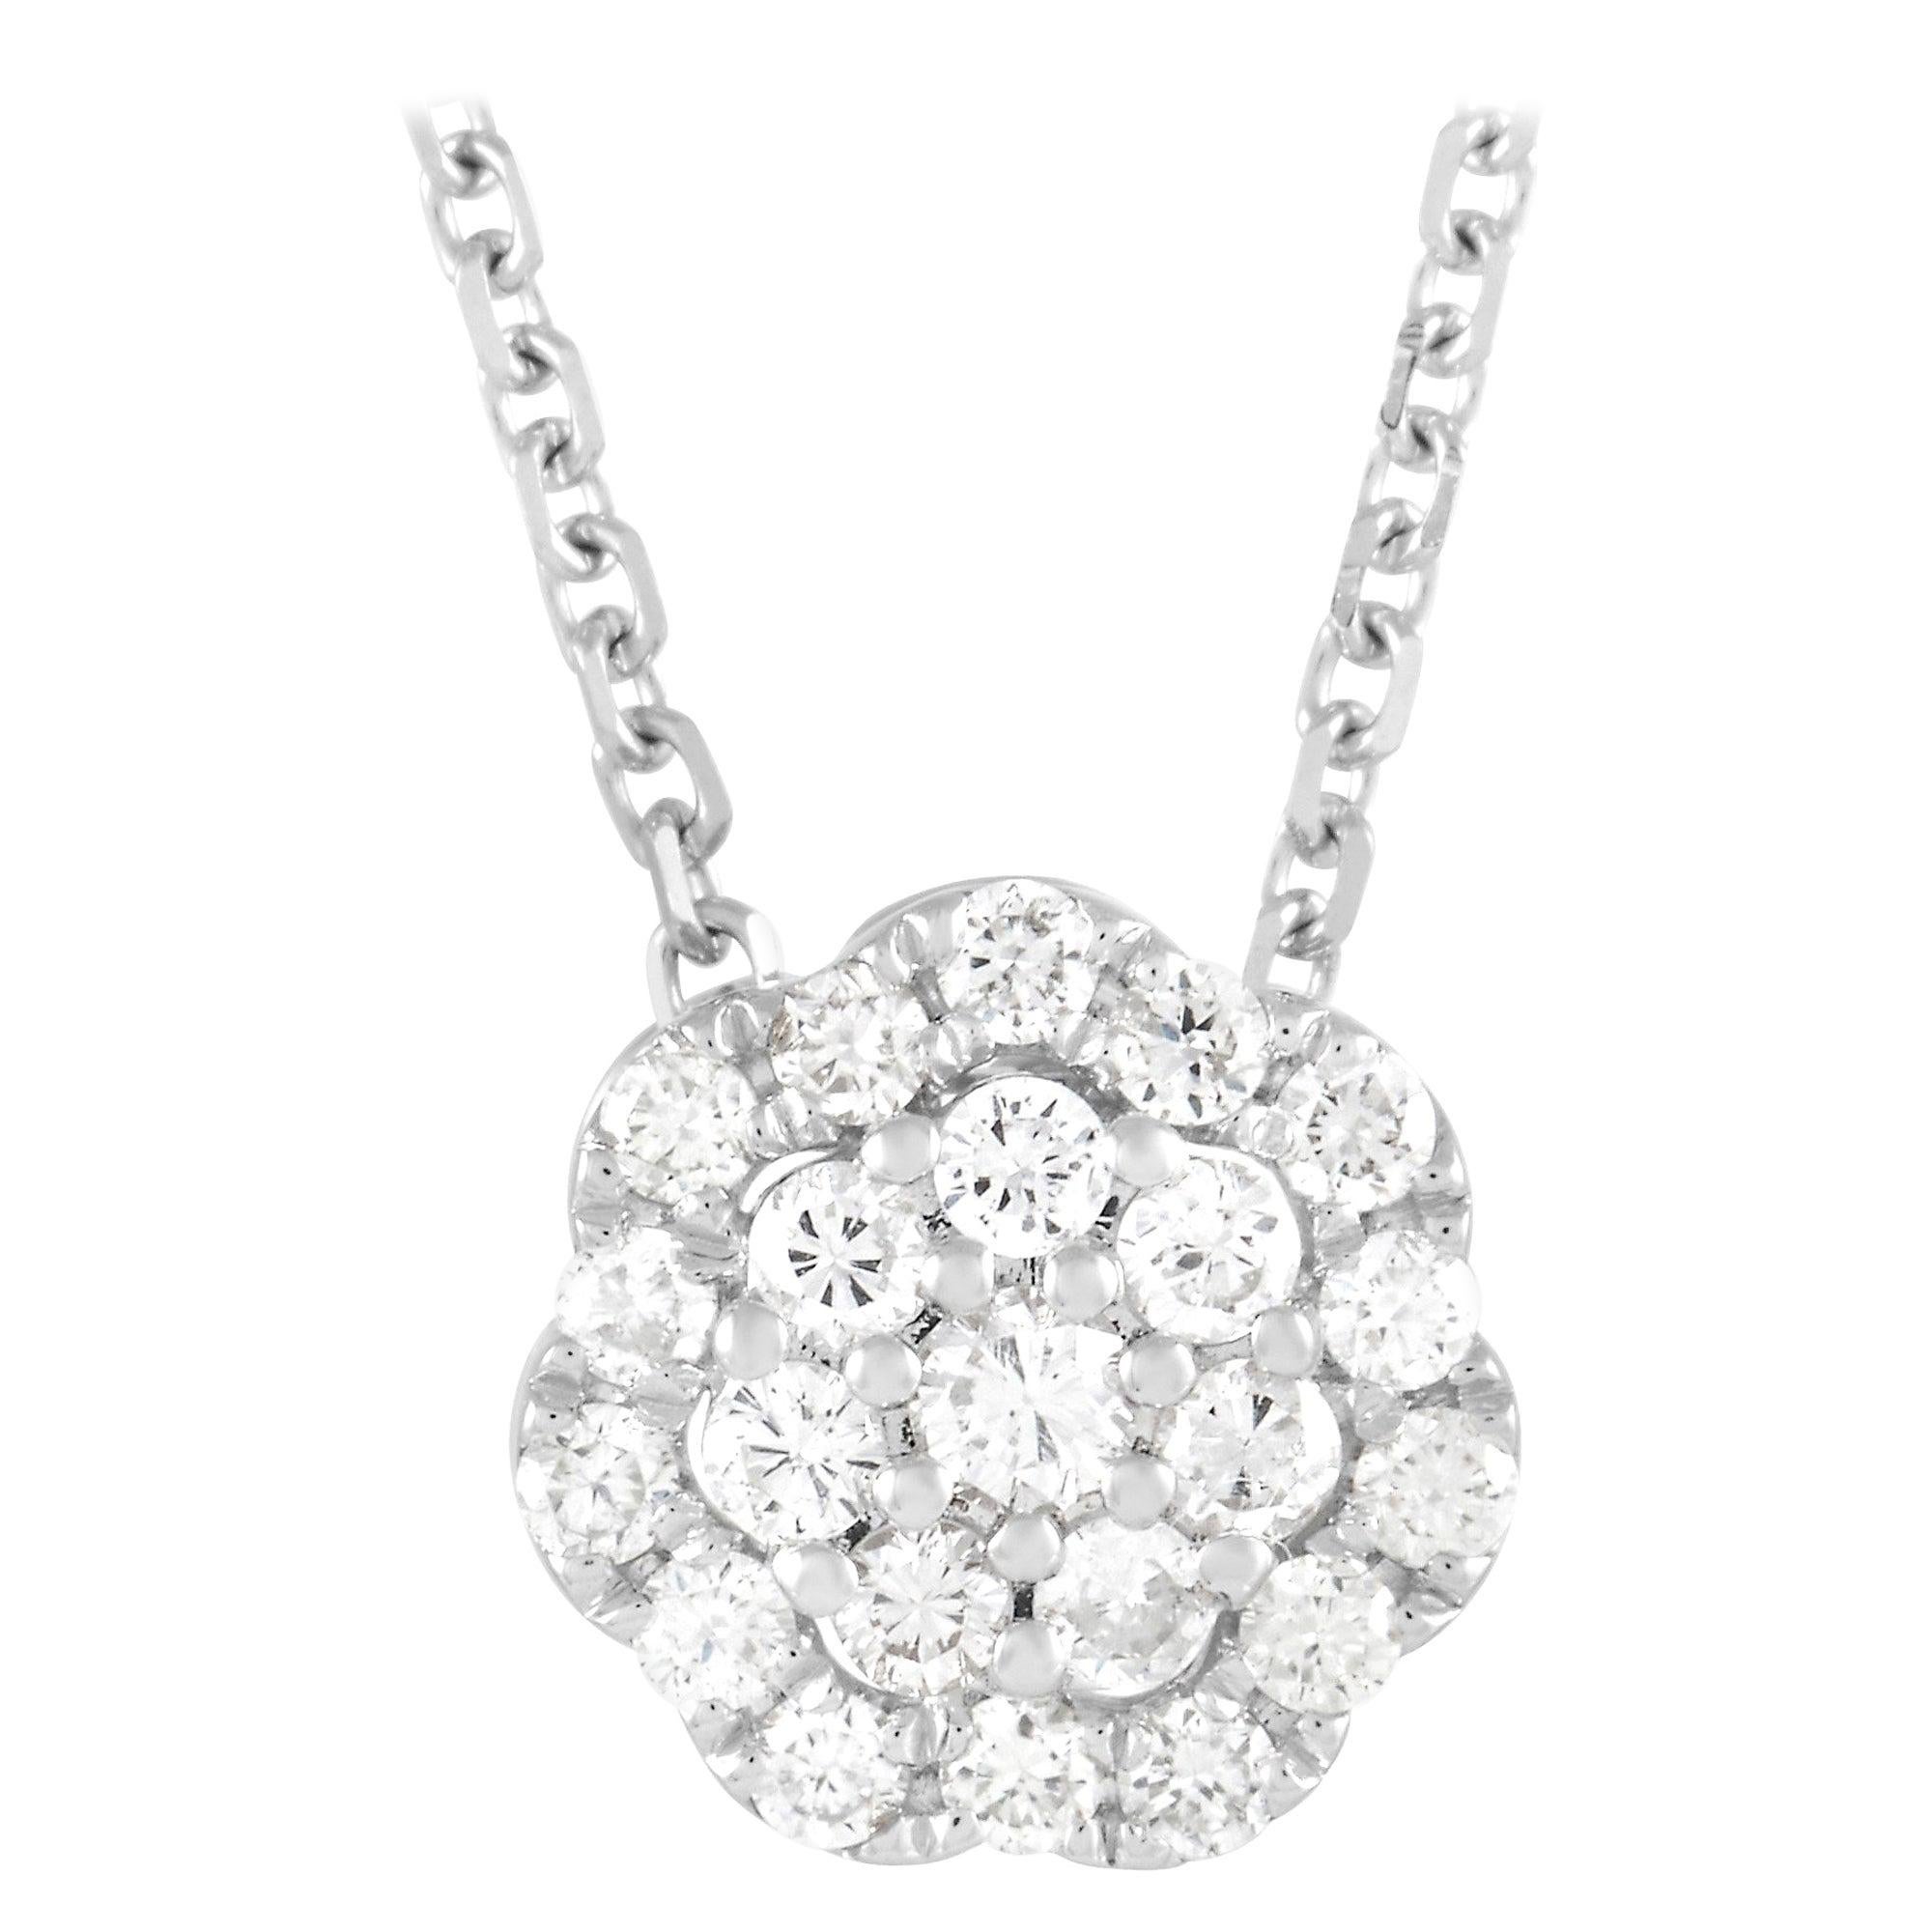 LB Exclusive 18k White Gold 0.27ct Diamond Pendant Necklace